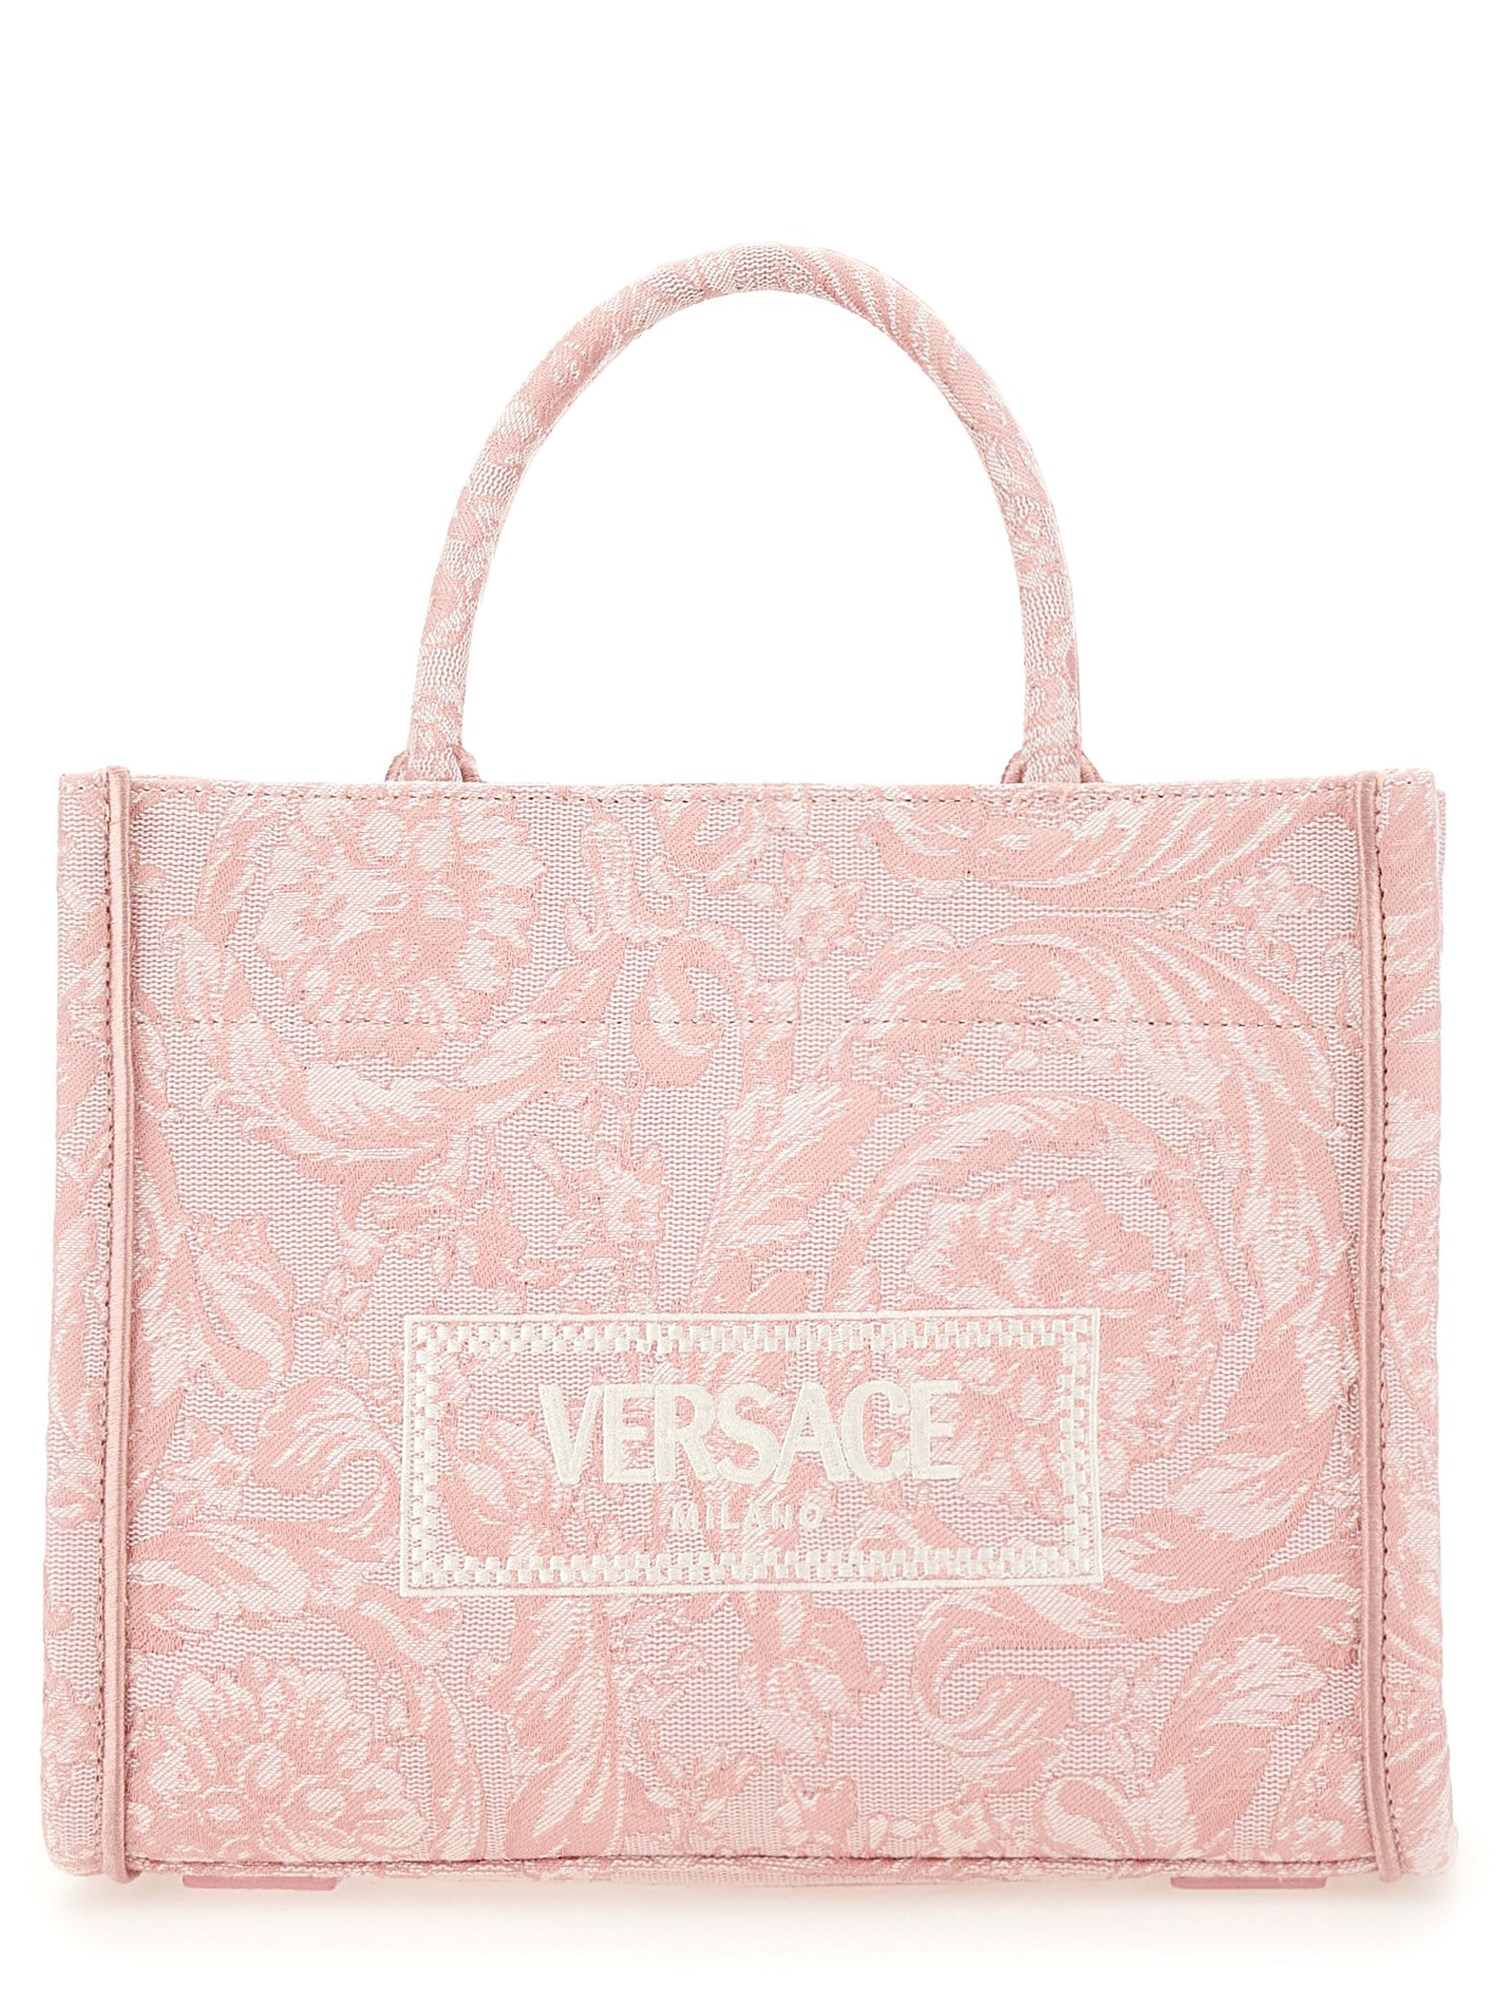 Versace versace shopper bag "athena" small